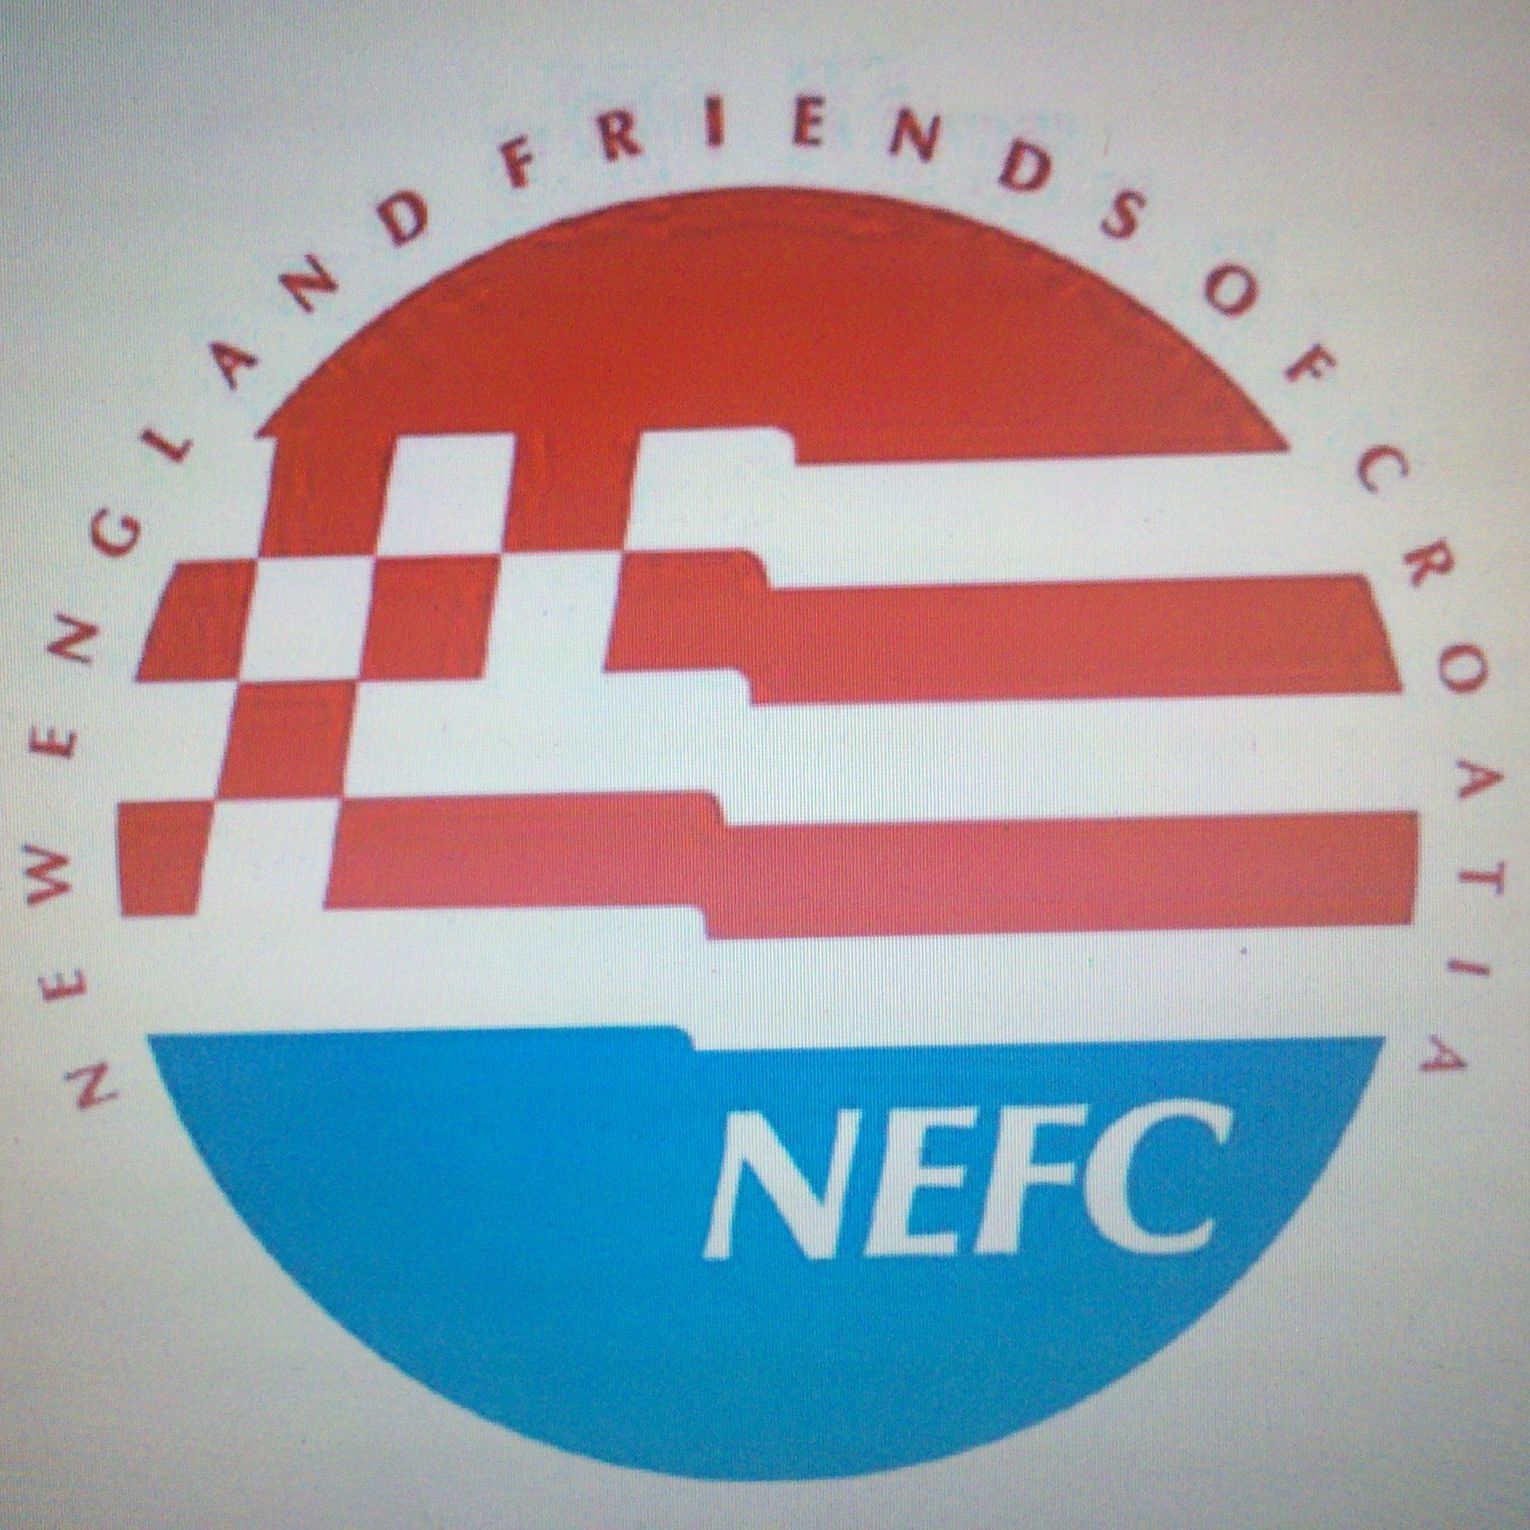 Croatian Speaking Organization in USA - New England Friends of Croatia